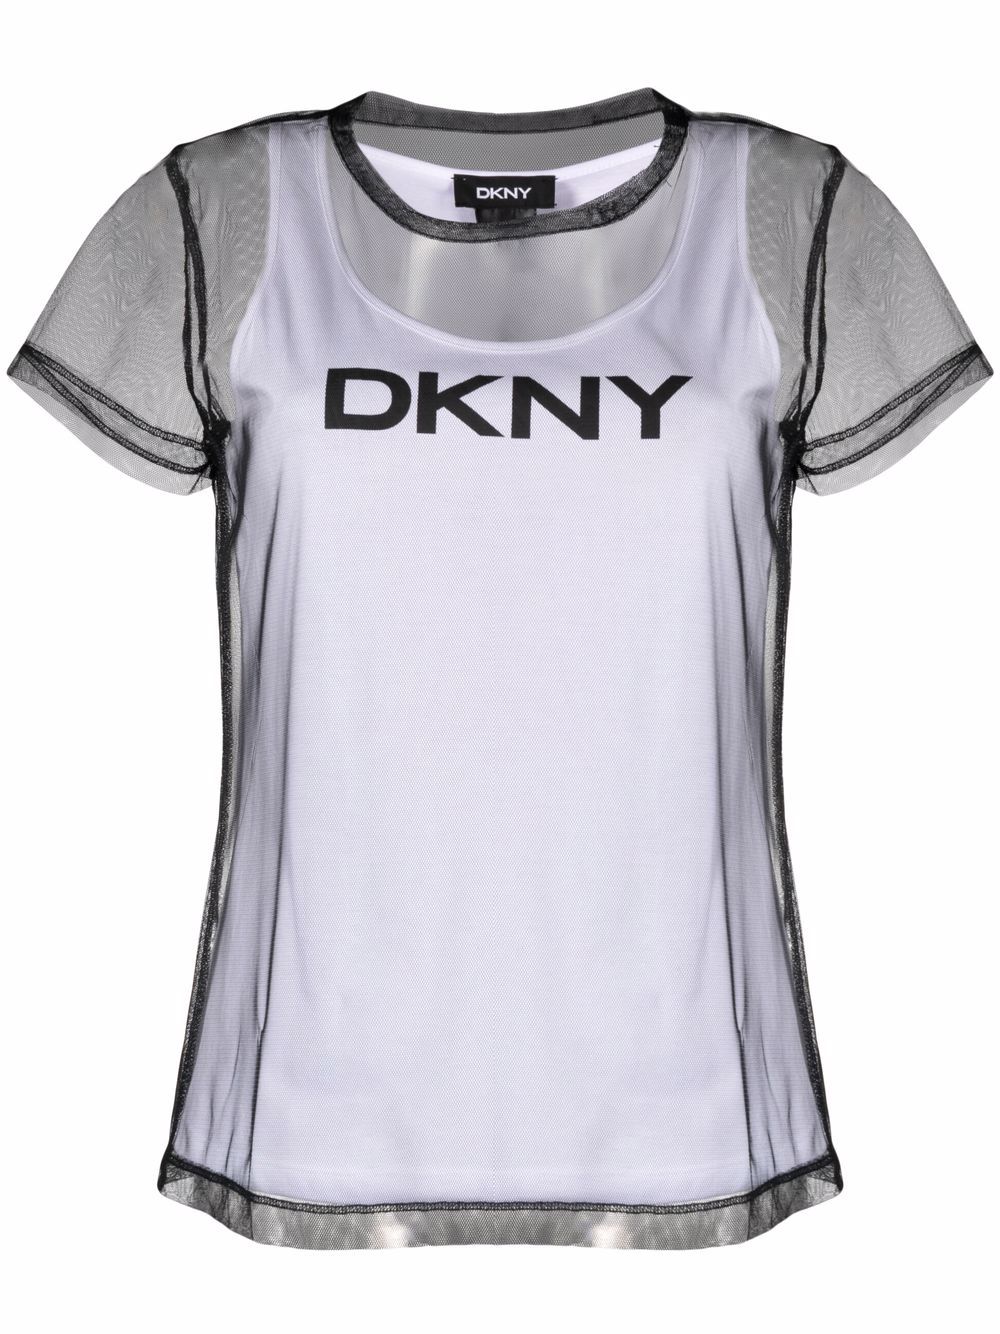 фото Dkny полупрозрачная футболка с логотипом